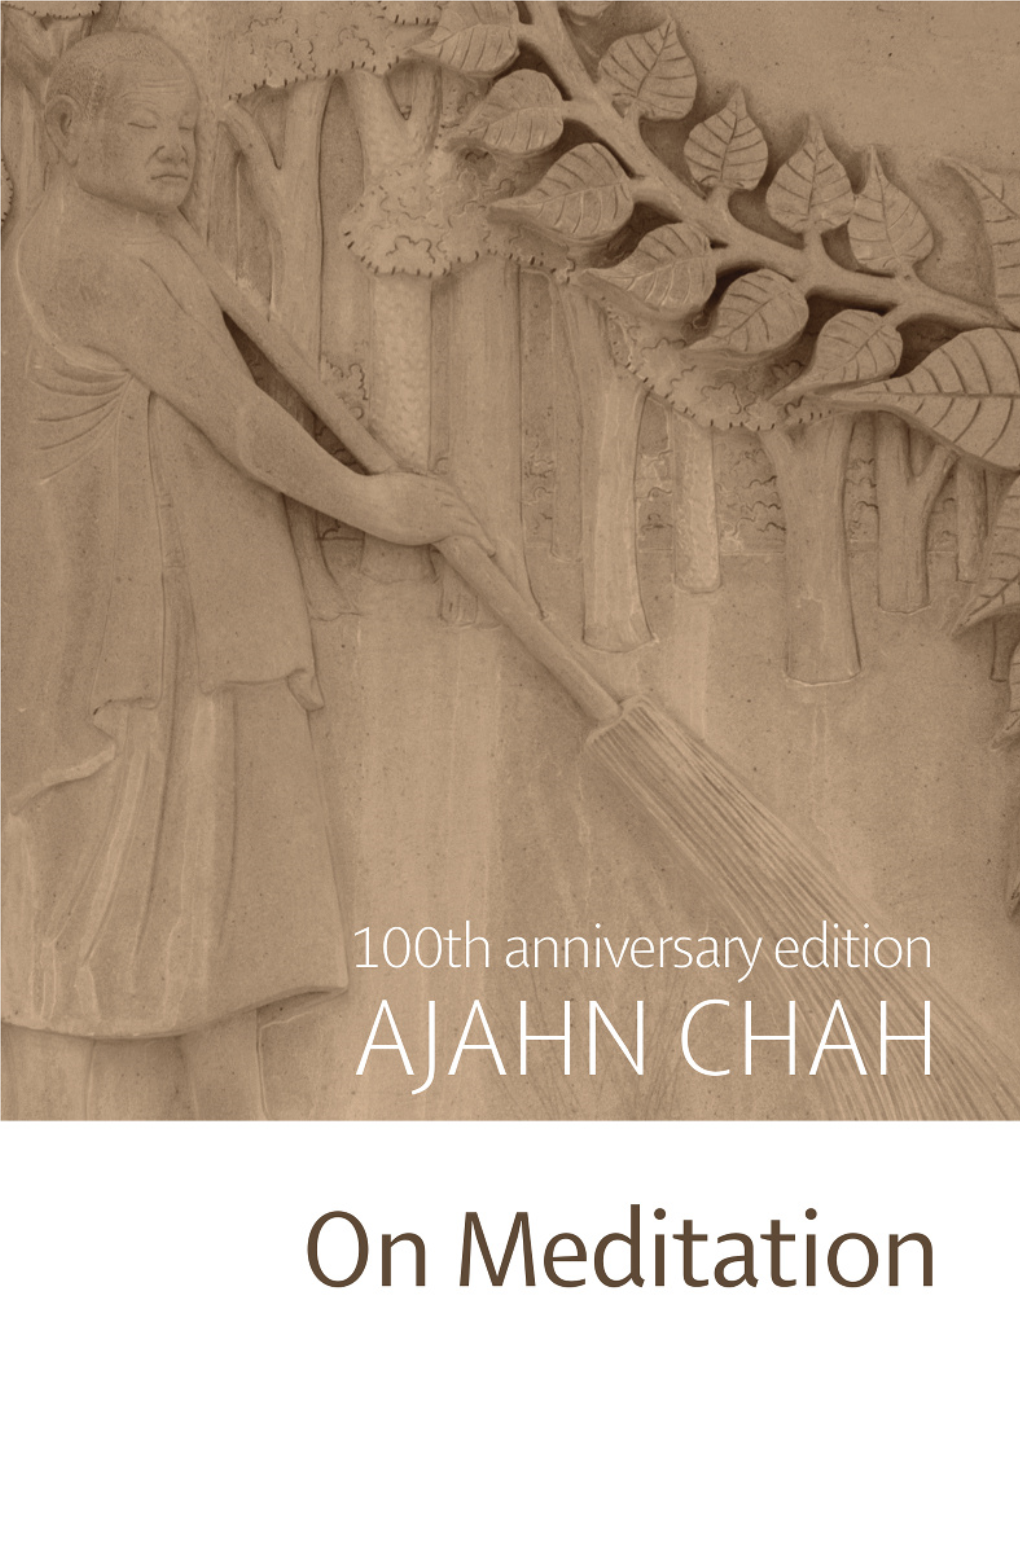 On Meditation by Ajahn Chah